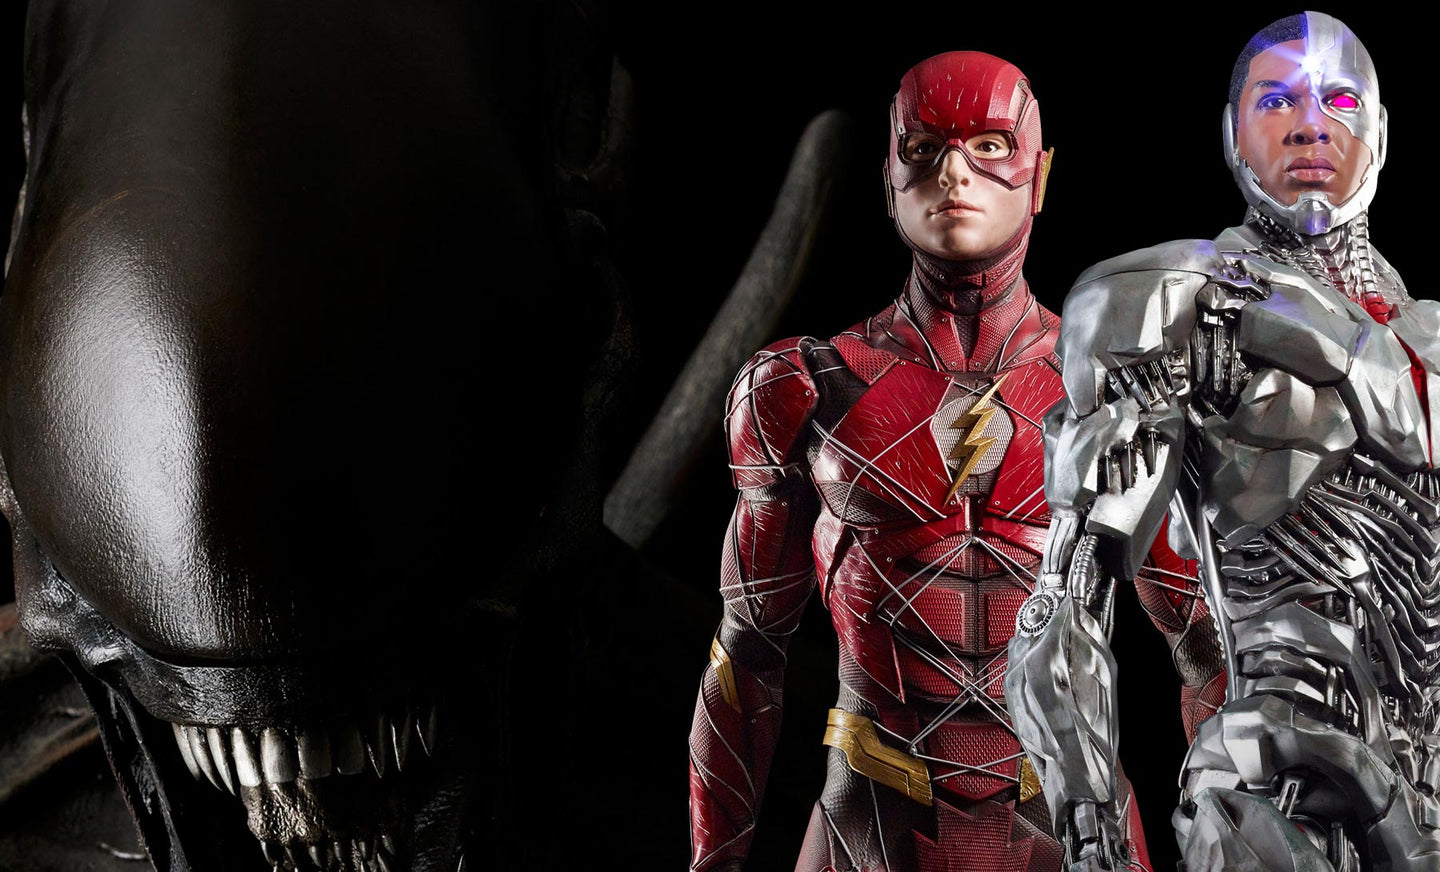 Lifesize Statues Justice League Flash und Cyborg